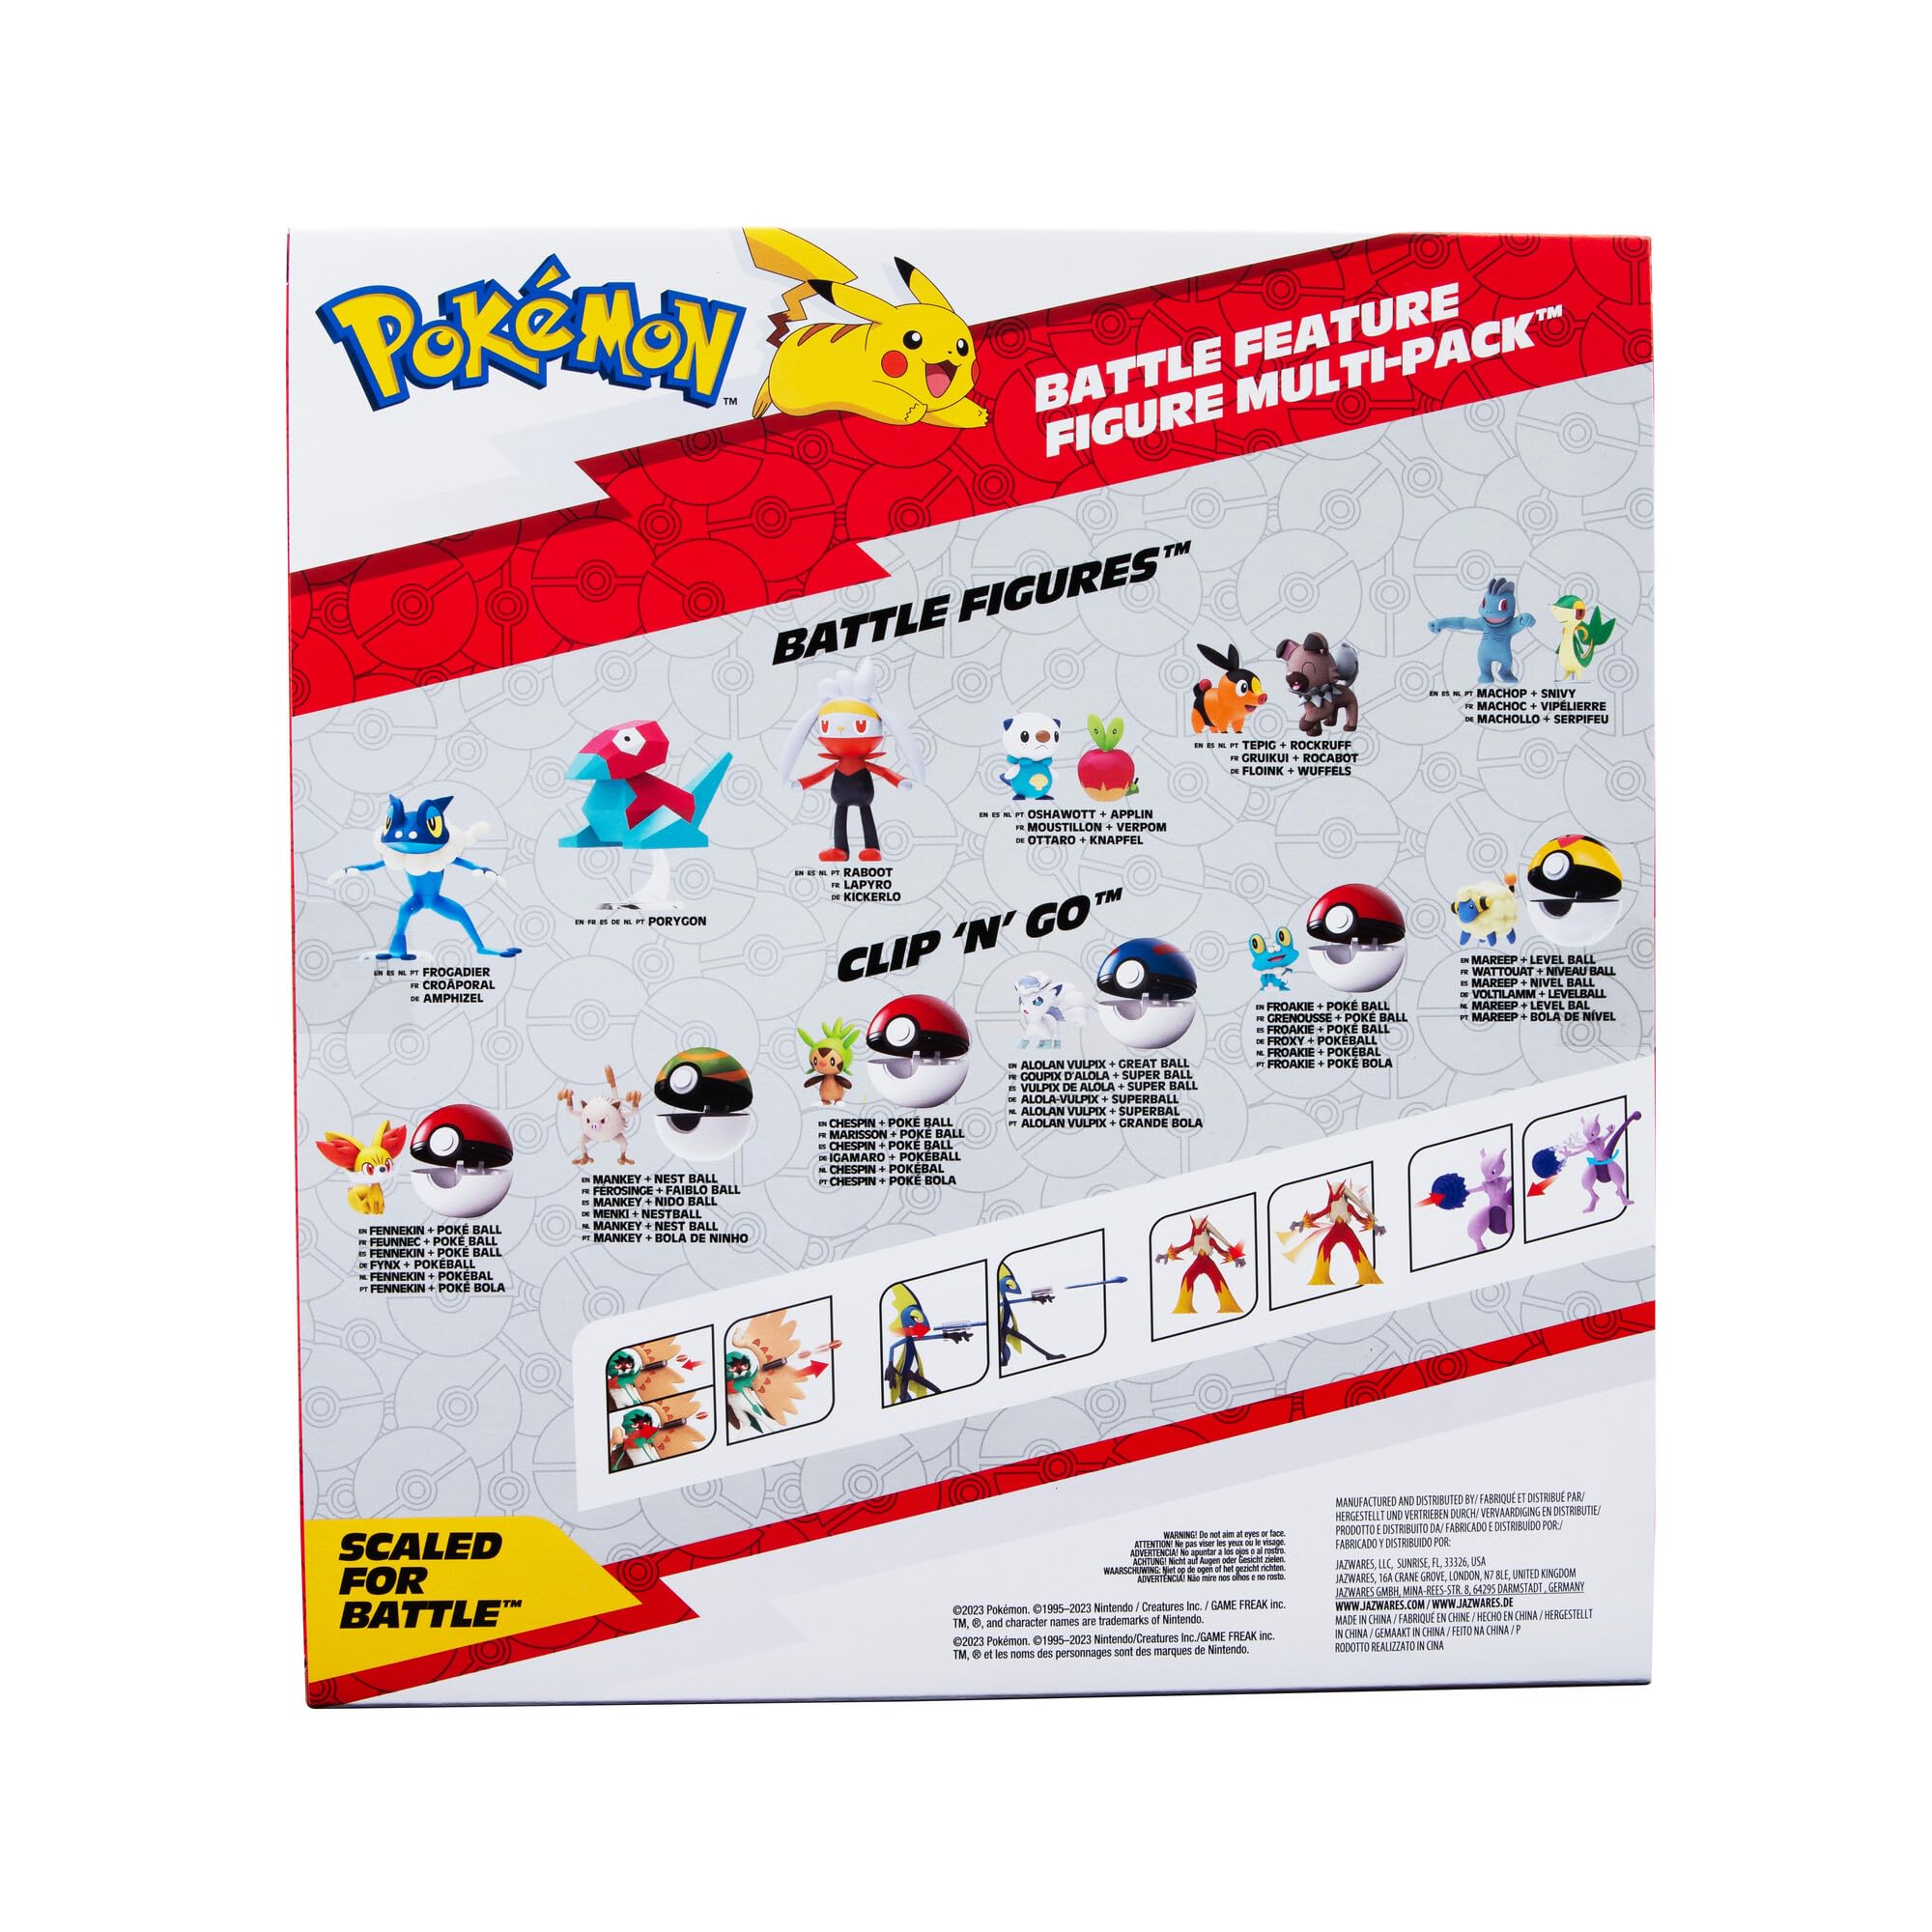 Pokemon Battle Feature Figure 4 Pack - Includes Four 4.5-Inch Battle Figures with Unique Battle Features - Amazon Exclusive